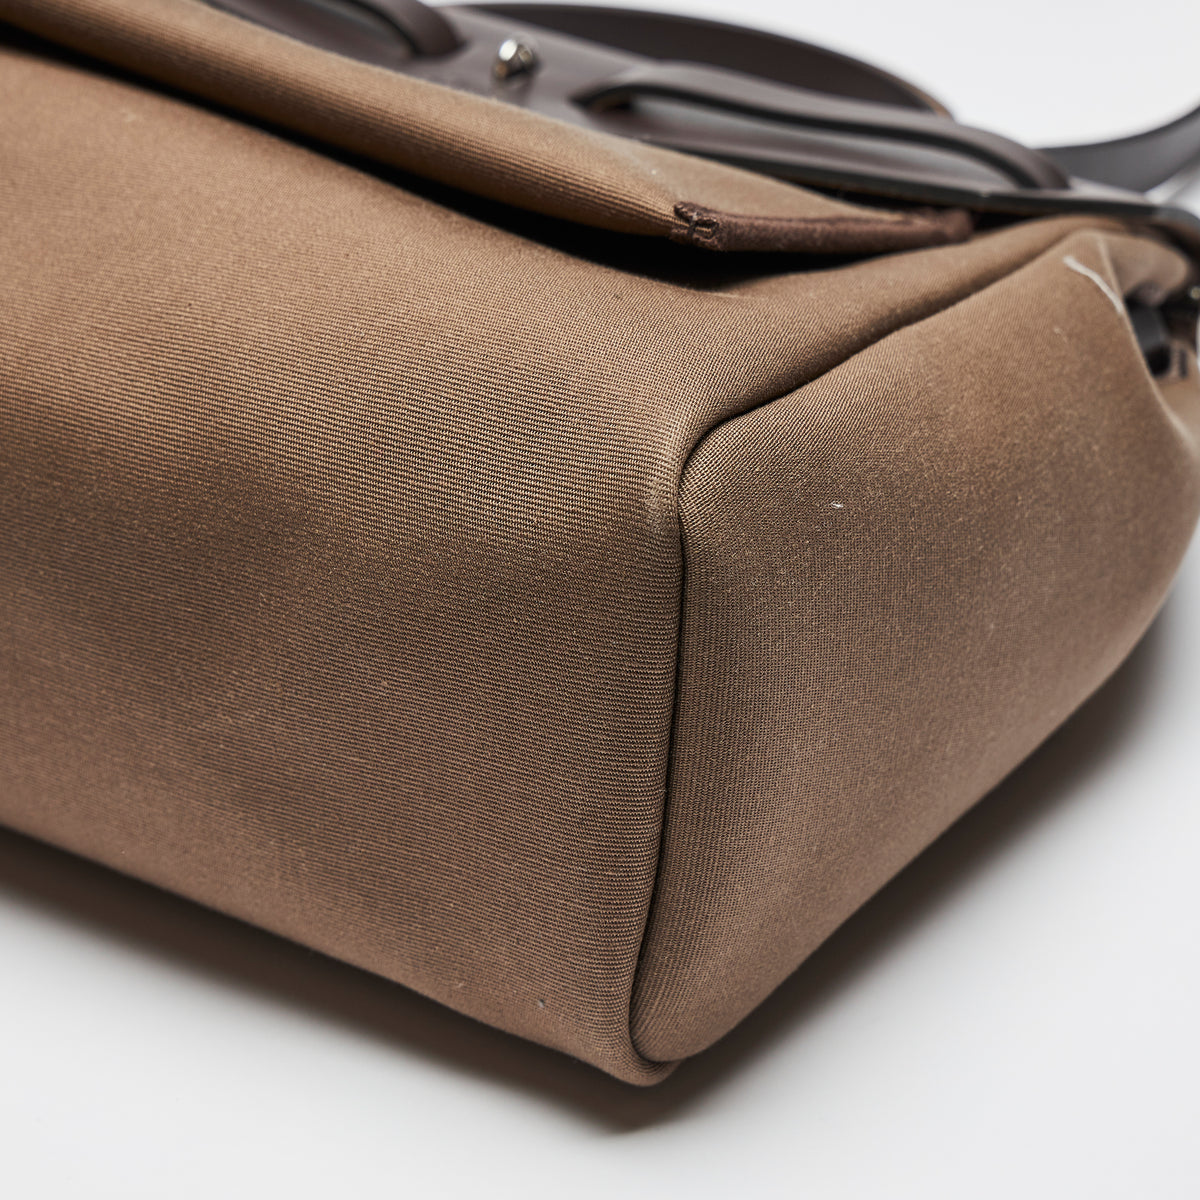 Excellent Pre-Loved Brown Canvas Top Handle Flap Bag with Shoulder Strap. (croner)